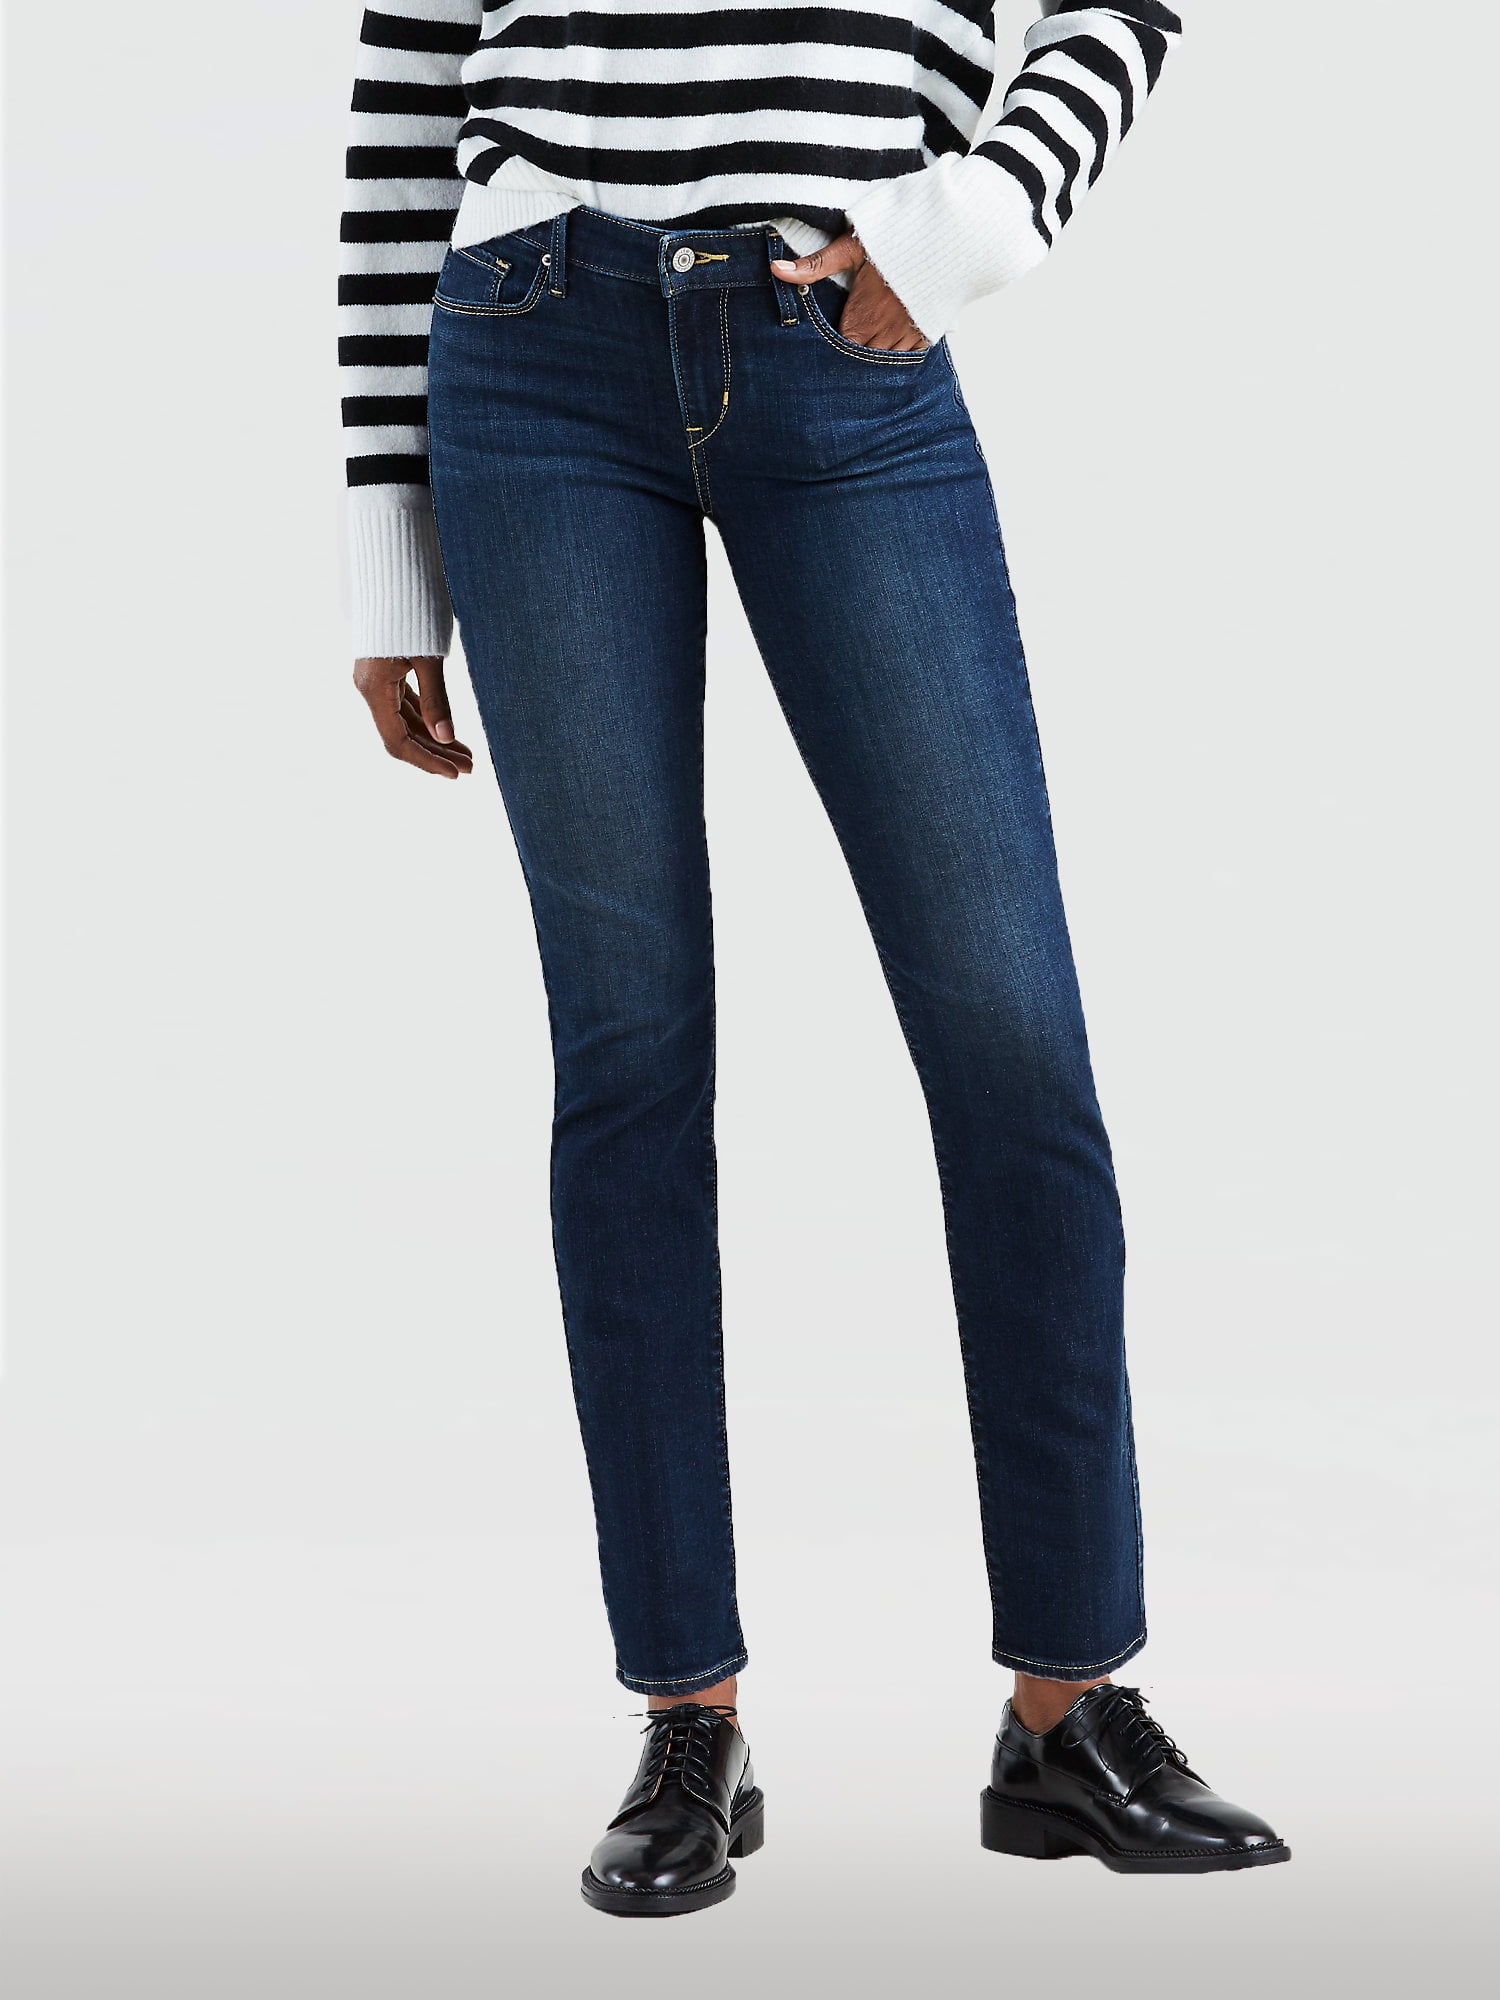 Levi's Original Women's Classic Modern Mid Rise Skinny Jeans - Walmart.com